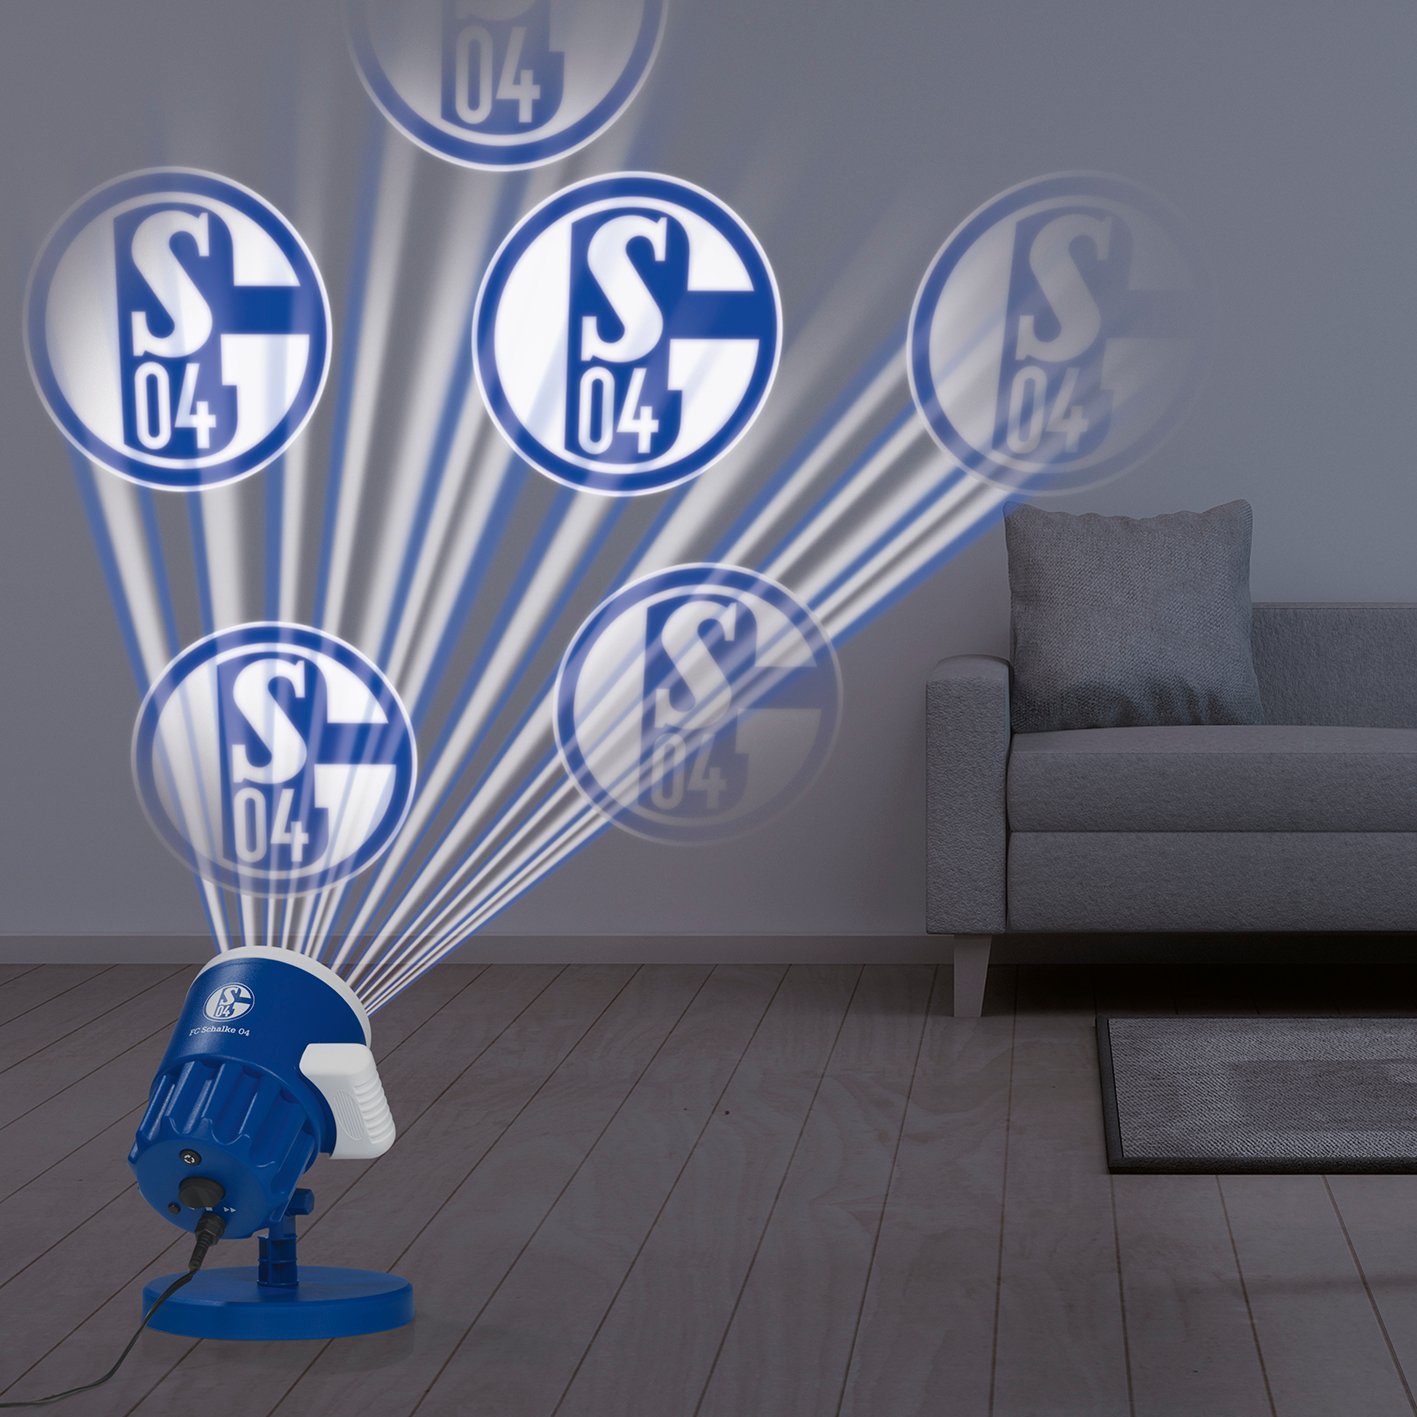 Schalke LED 04 Motivstrahler, mit Logo